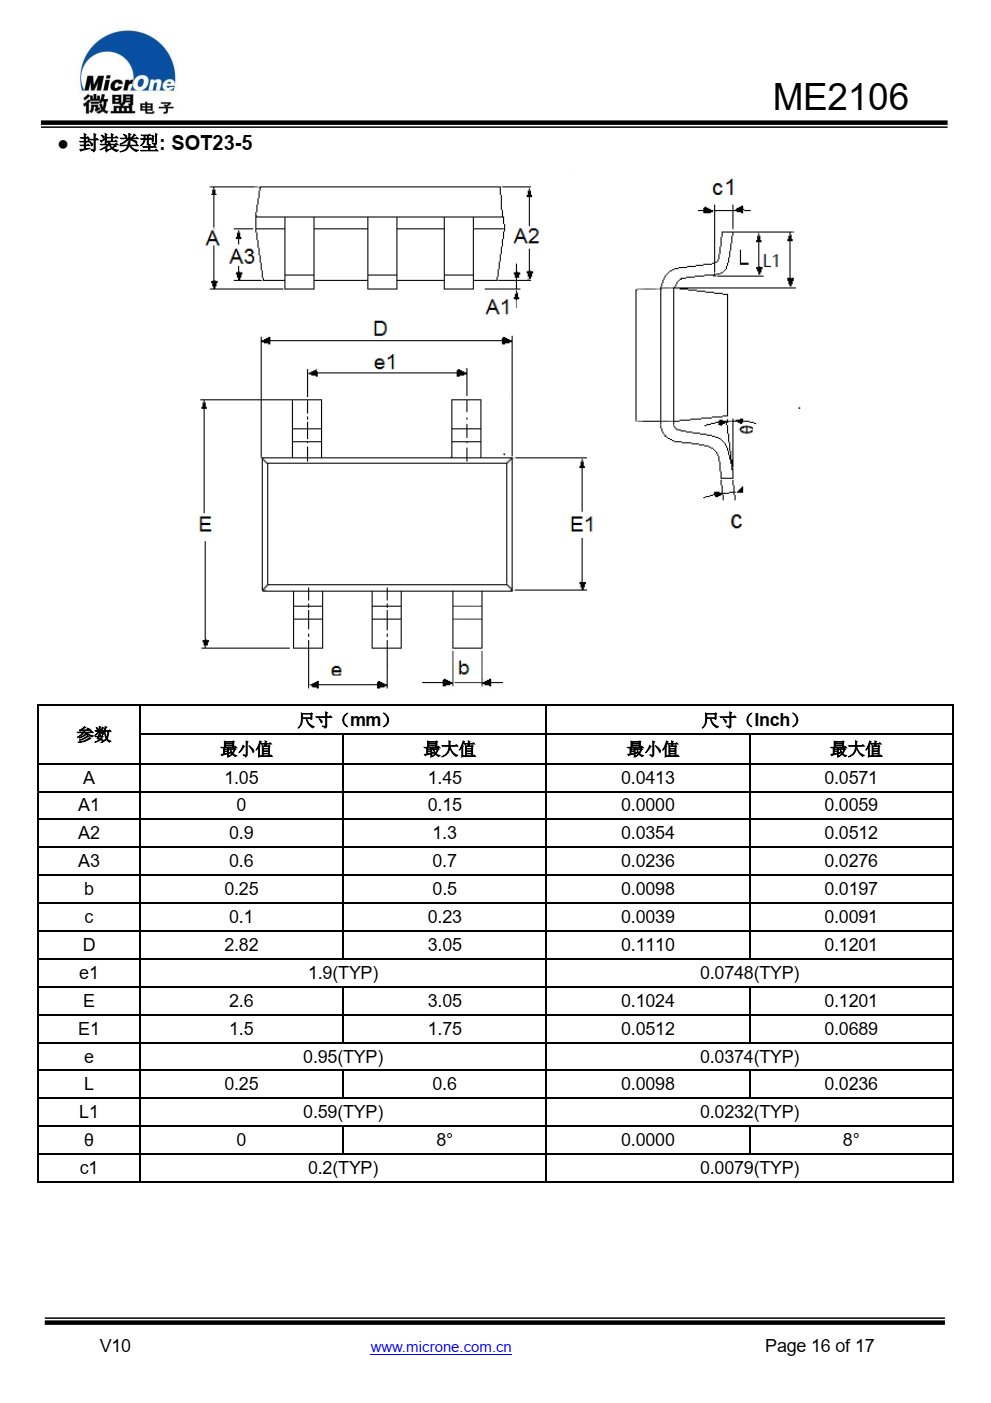 ME2106系列芯片是针对LED应用设计的PFM 控制 模式的开关型DC/DC 升压恒流芯片，通过外接电阻可使 输出电流值恒定在0mA～500mA